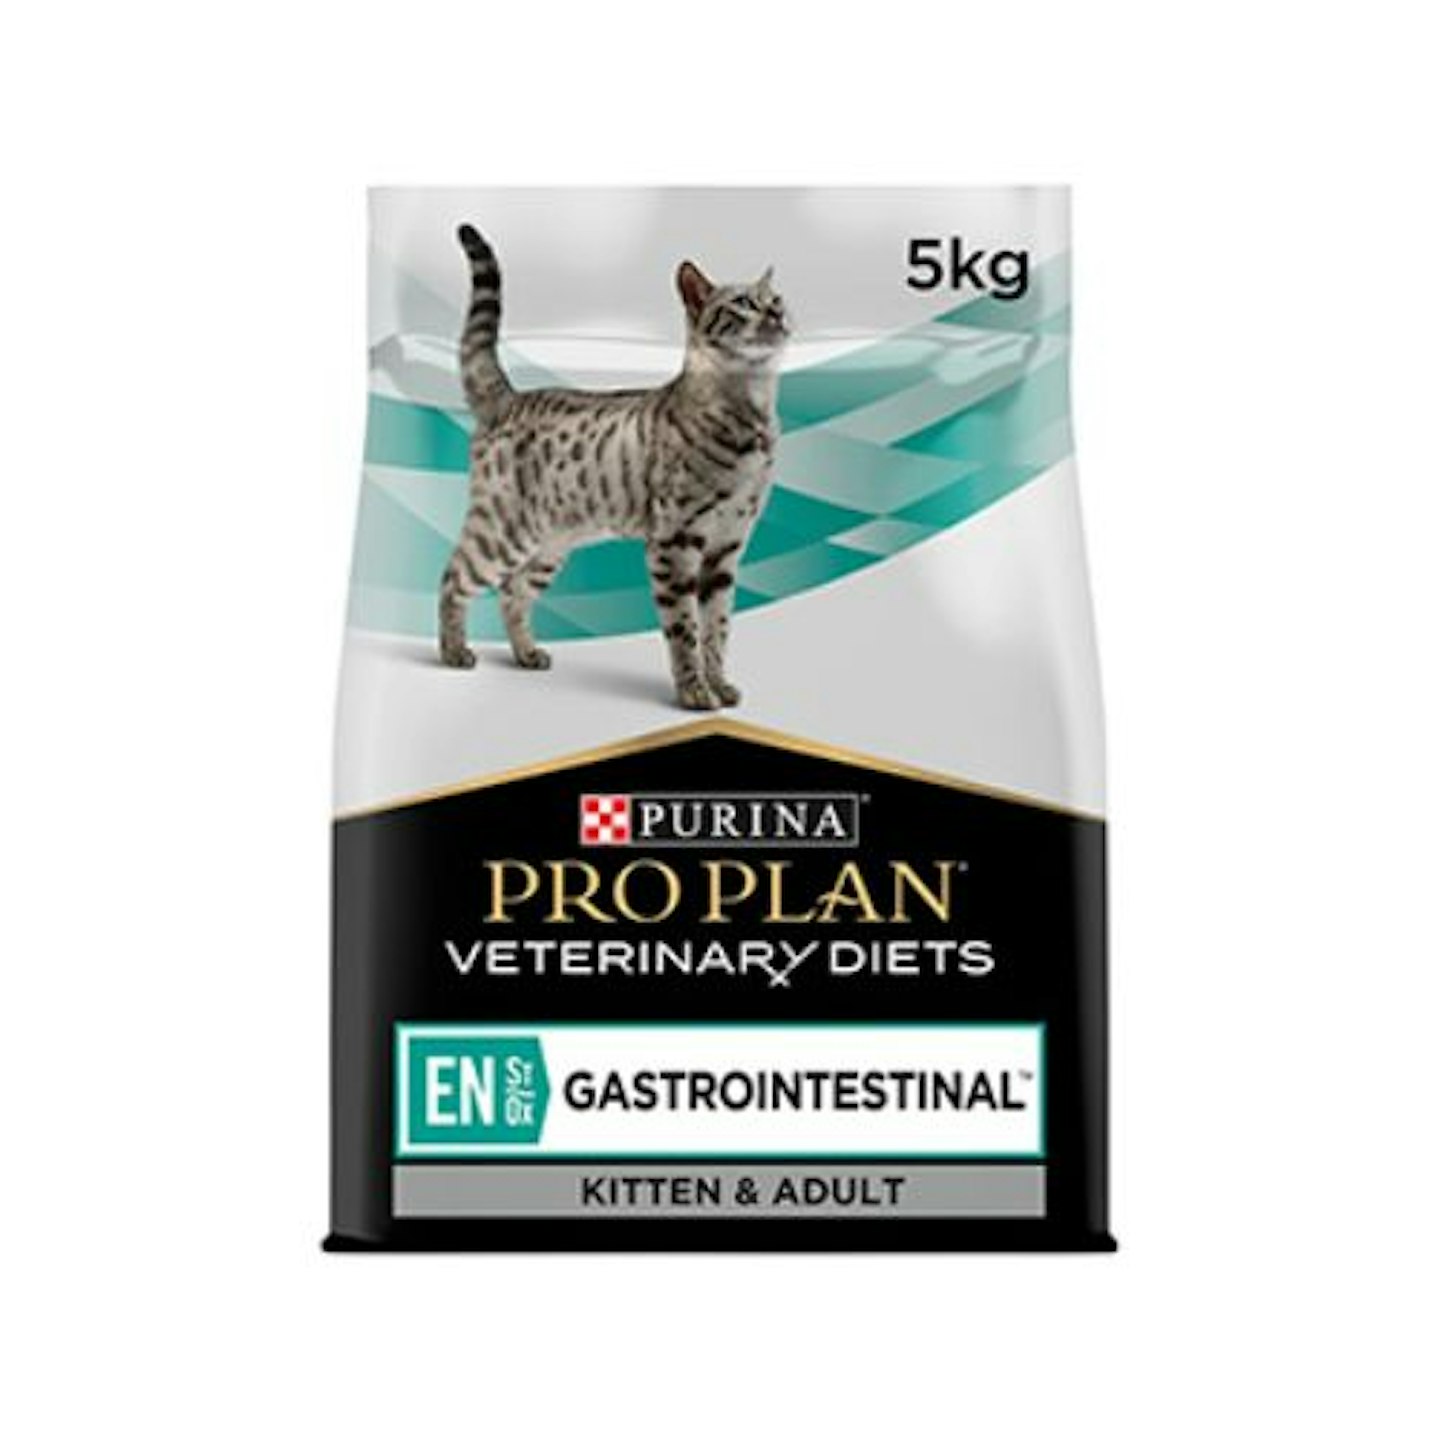 Pro Plan Vet Diet EN Gastrointestinal Dry Cat Food